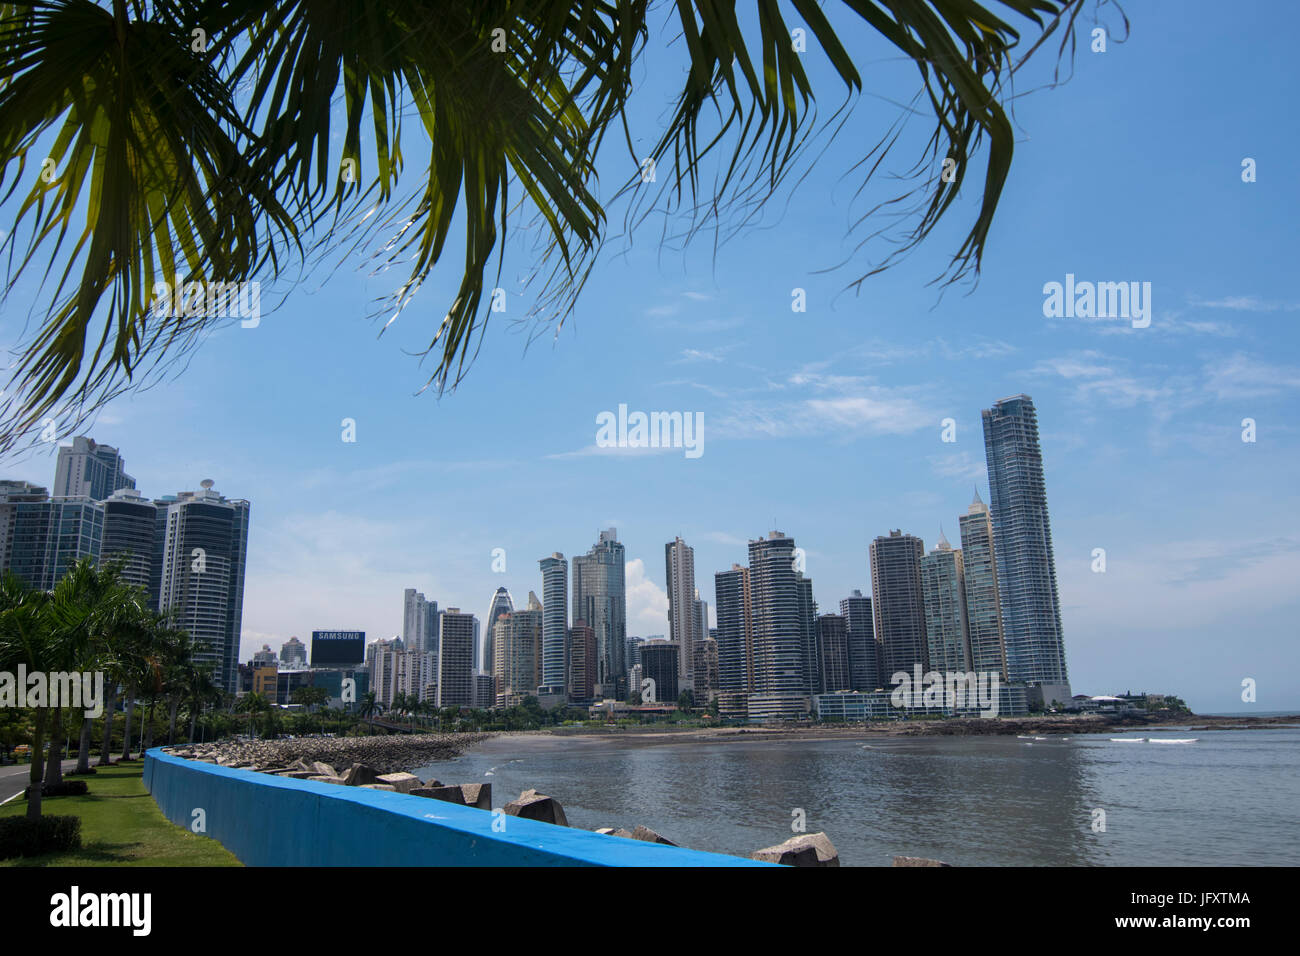 High rise buildings in Panama City, Panama Stock Photo